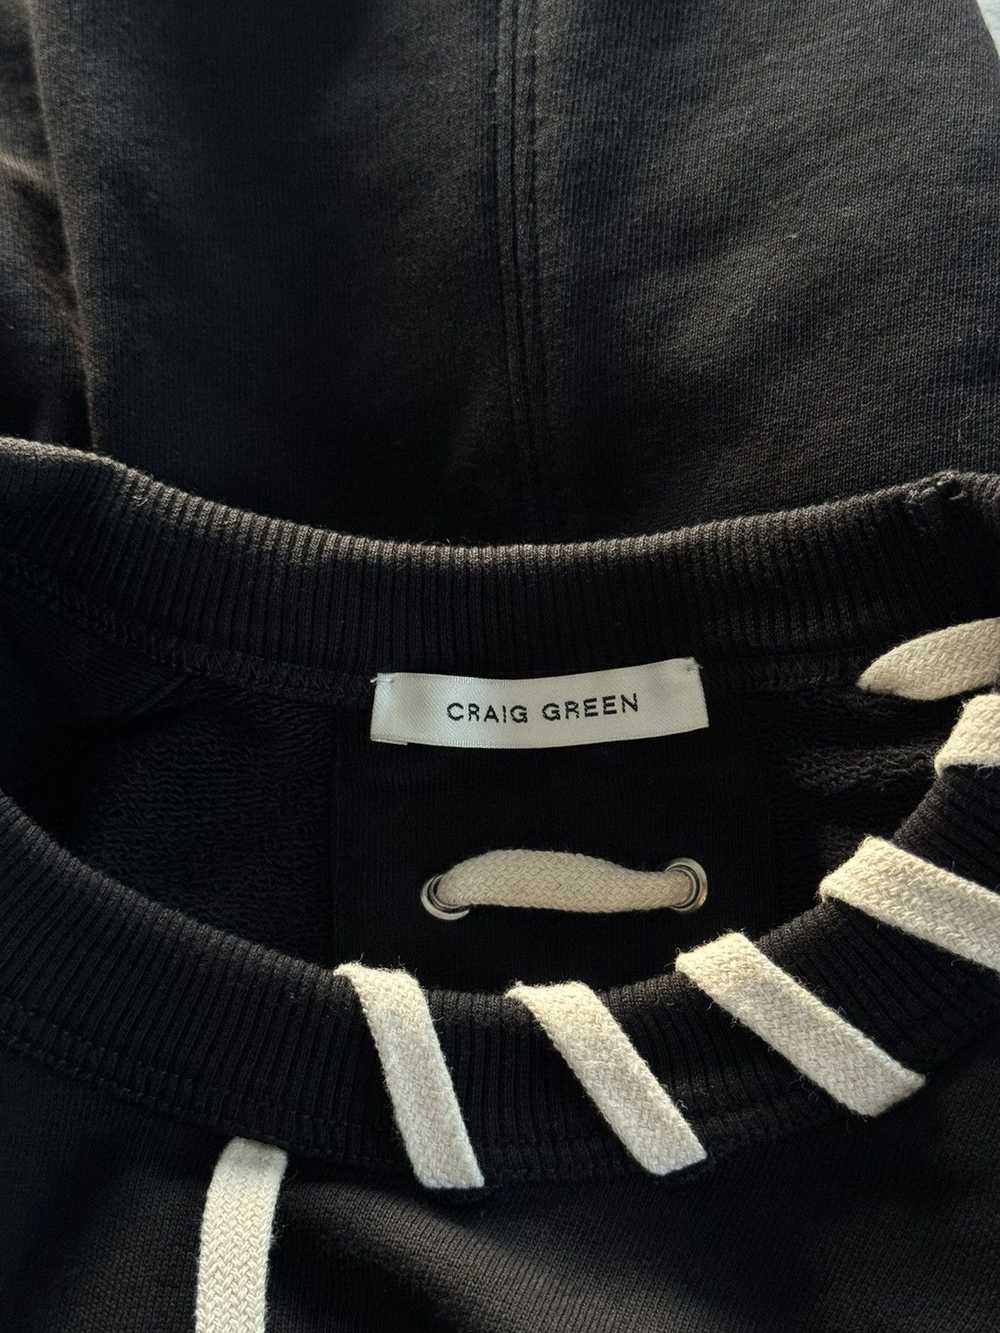 Craig Green Black Laced Sweatshirt FW21 XL - image 6